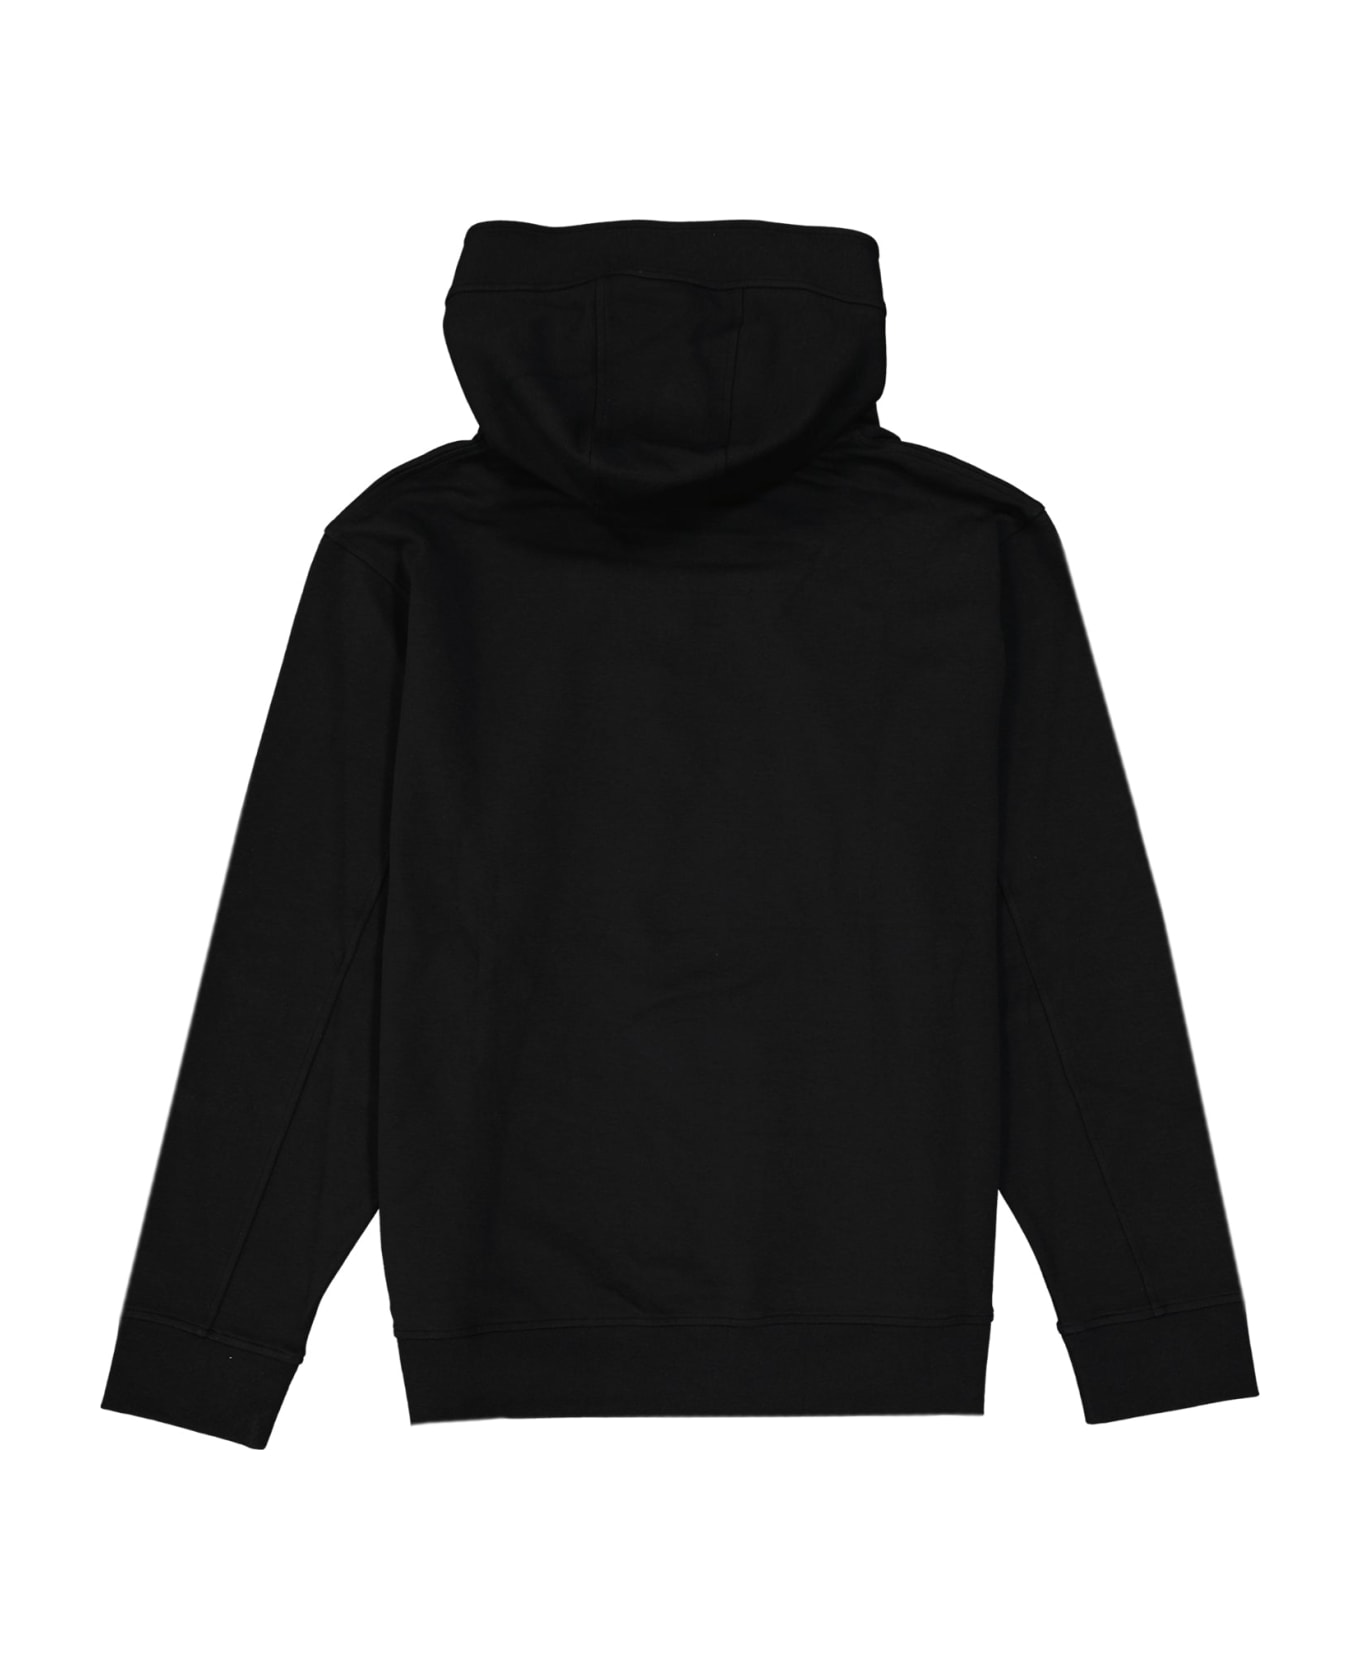 Neil Barrett Hooded Sweatshirt - Black